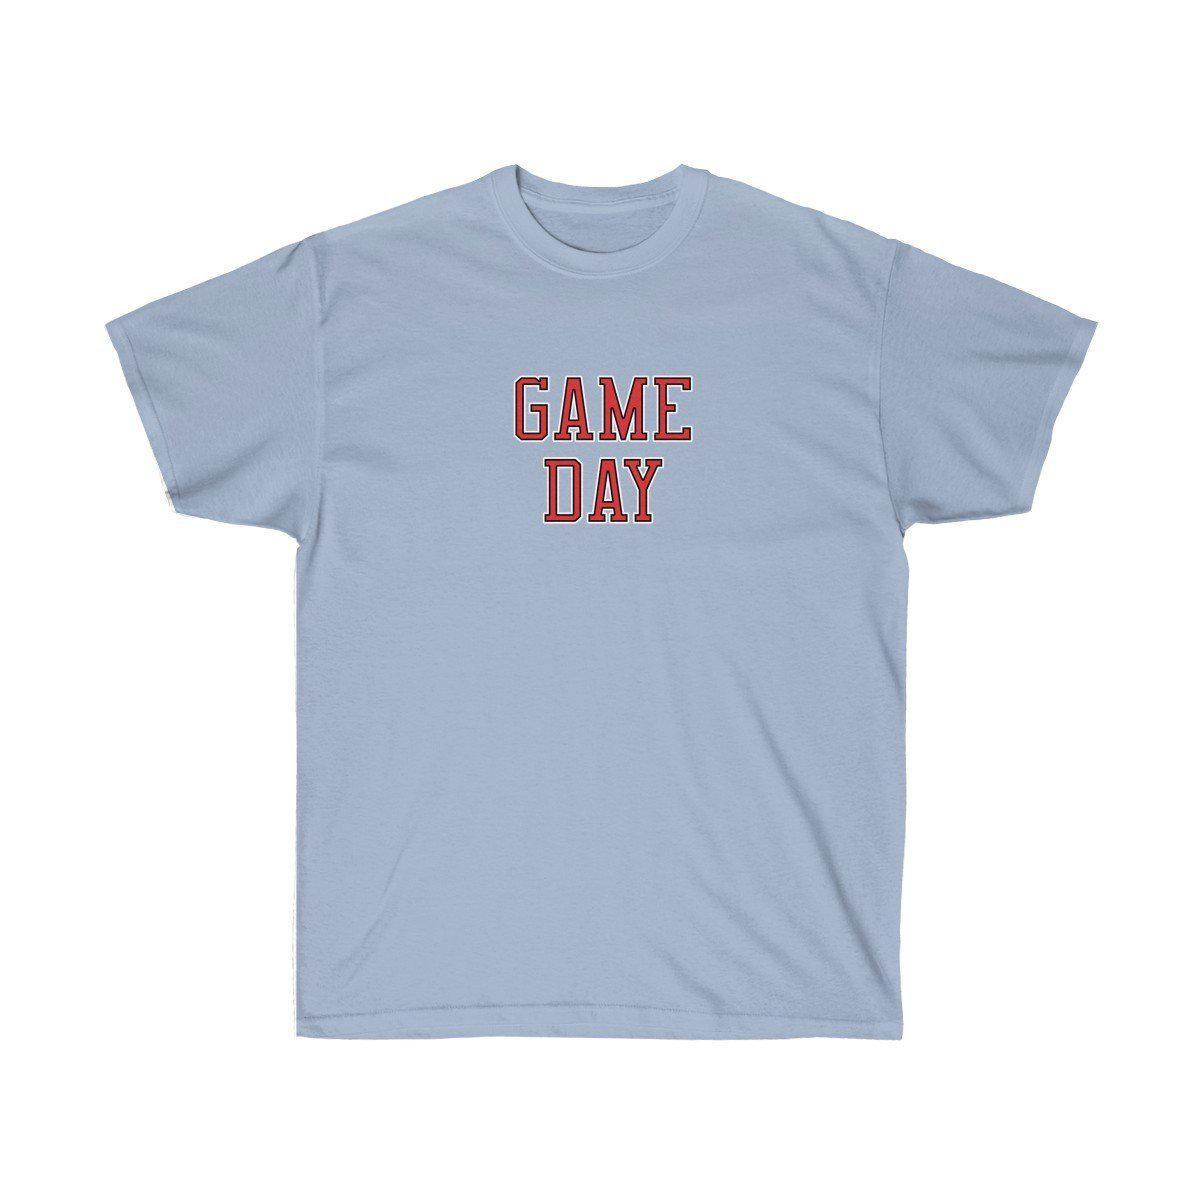 Game Day Tee - Sports T-shirt for Football, Basket, Soccer games-Light Blue-S-Archethype